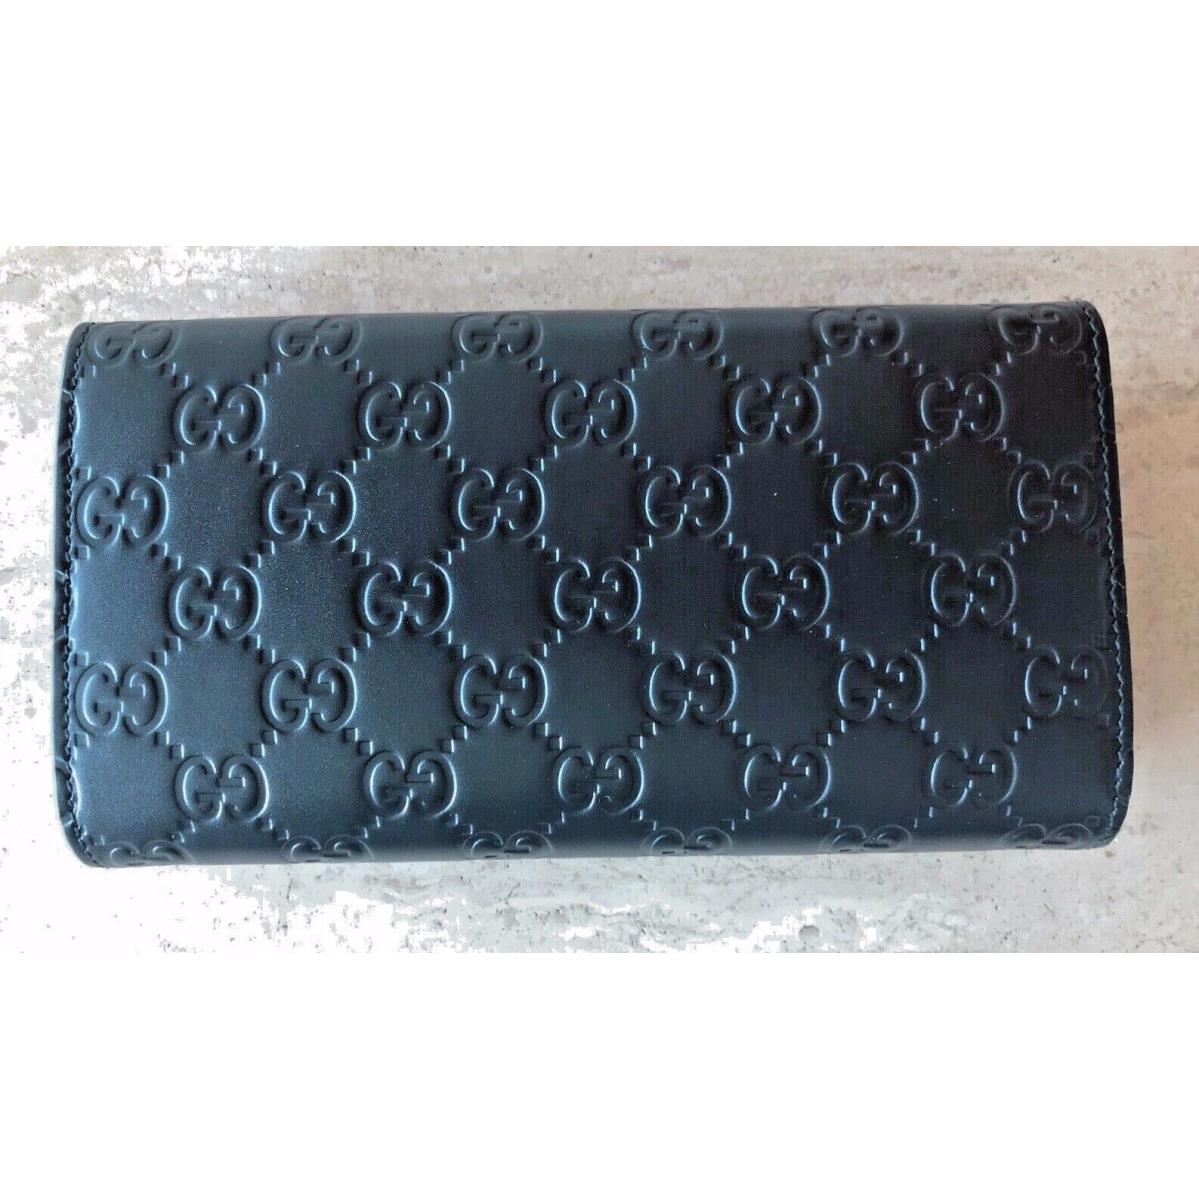 Gucci Signature Guccissima Black Clutch Fold Over GG Wallet Bag Purse Italy